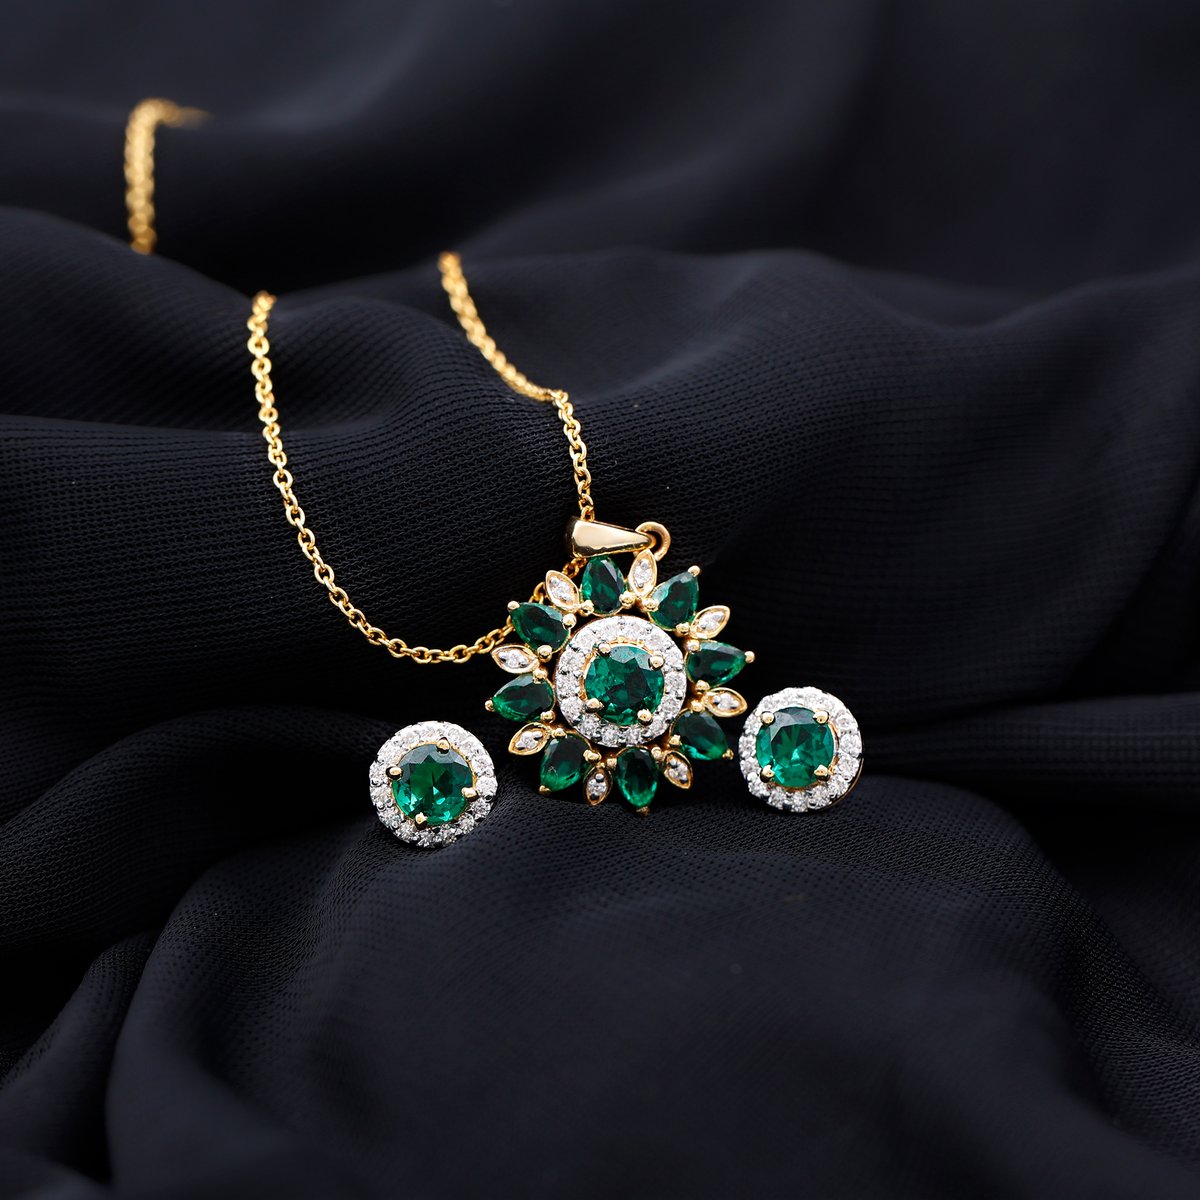 amazon.com/dp/B09939XHVM 

#ring #lab #emerald #newideas #jewelryinspiration #preciousstones #emeralds #moissanite #createdtocreate #ringoftheday